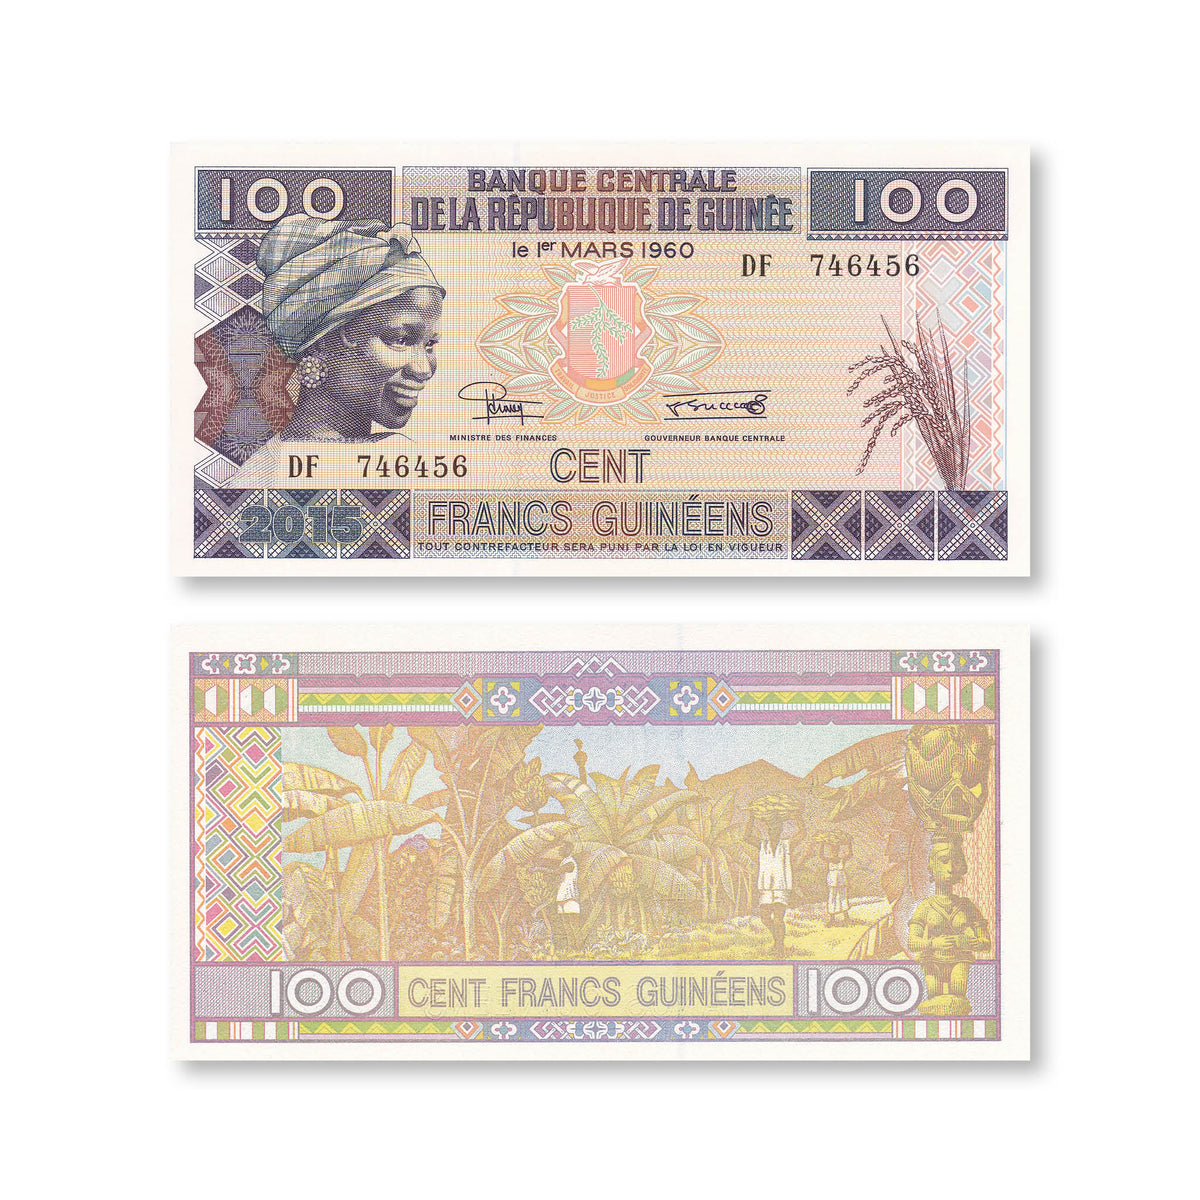 Guinea 100 Francs, 2015, B337a, PA47, UNC - Robert's World Money - World Banknotes